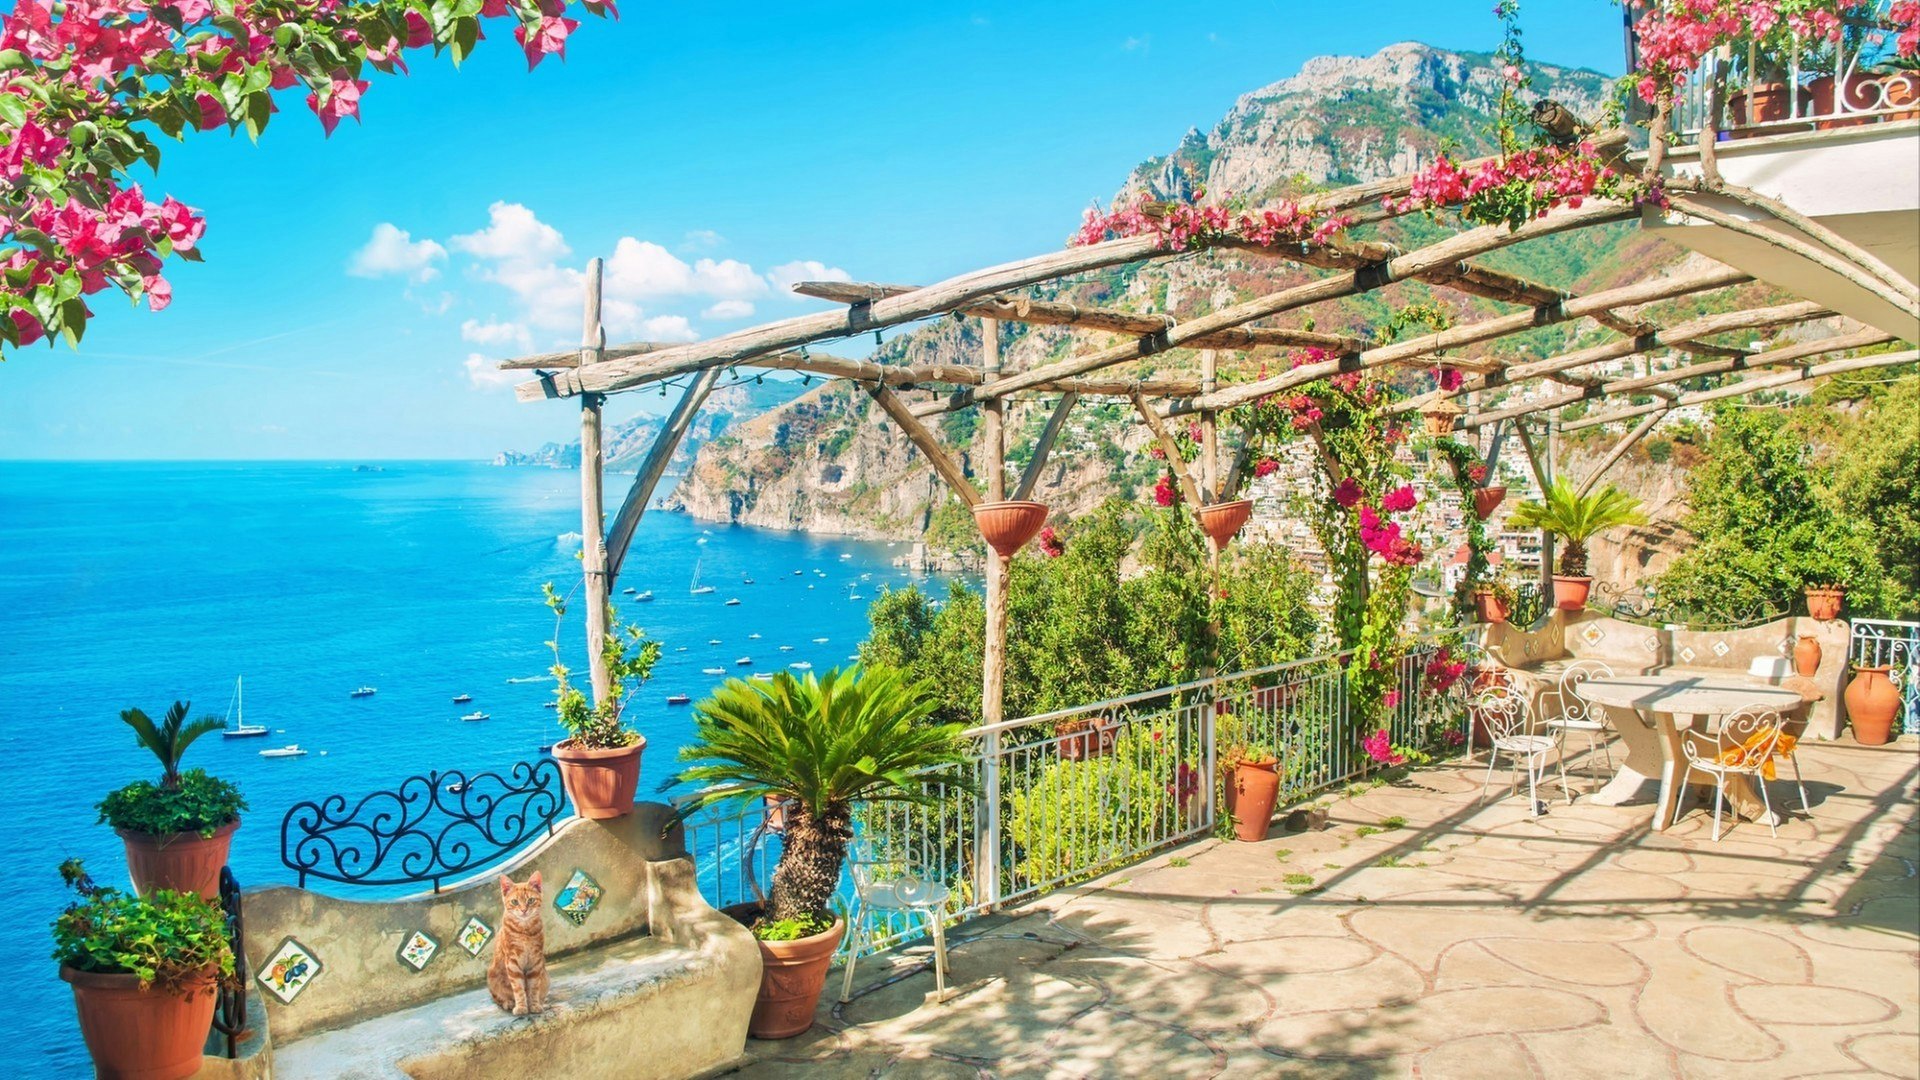 View of sea and mountains near Positano, Amalfi coast, Italy